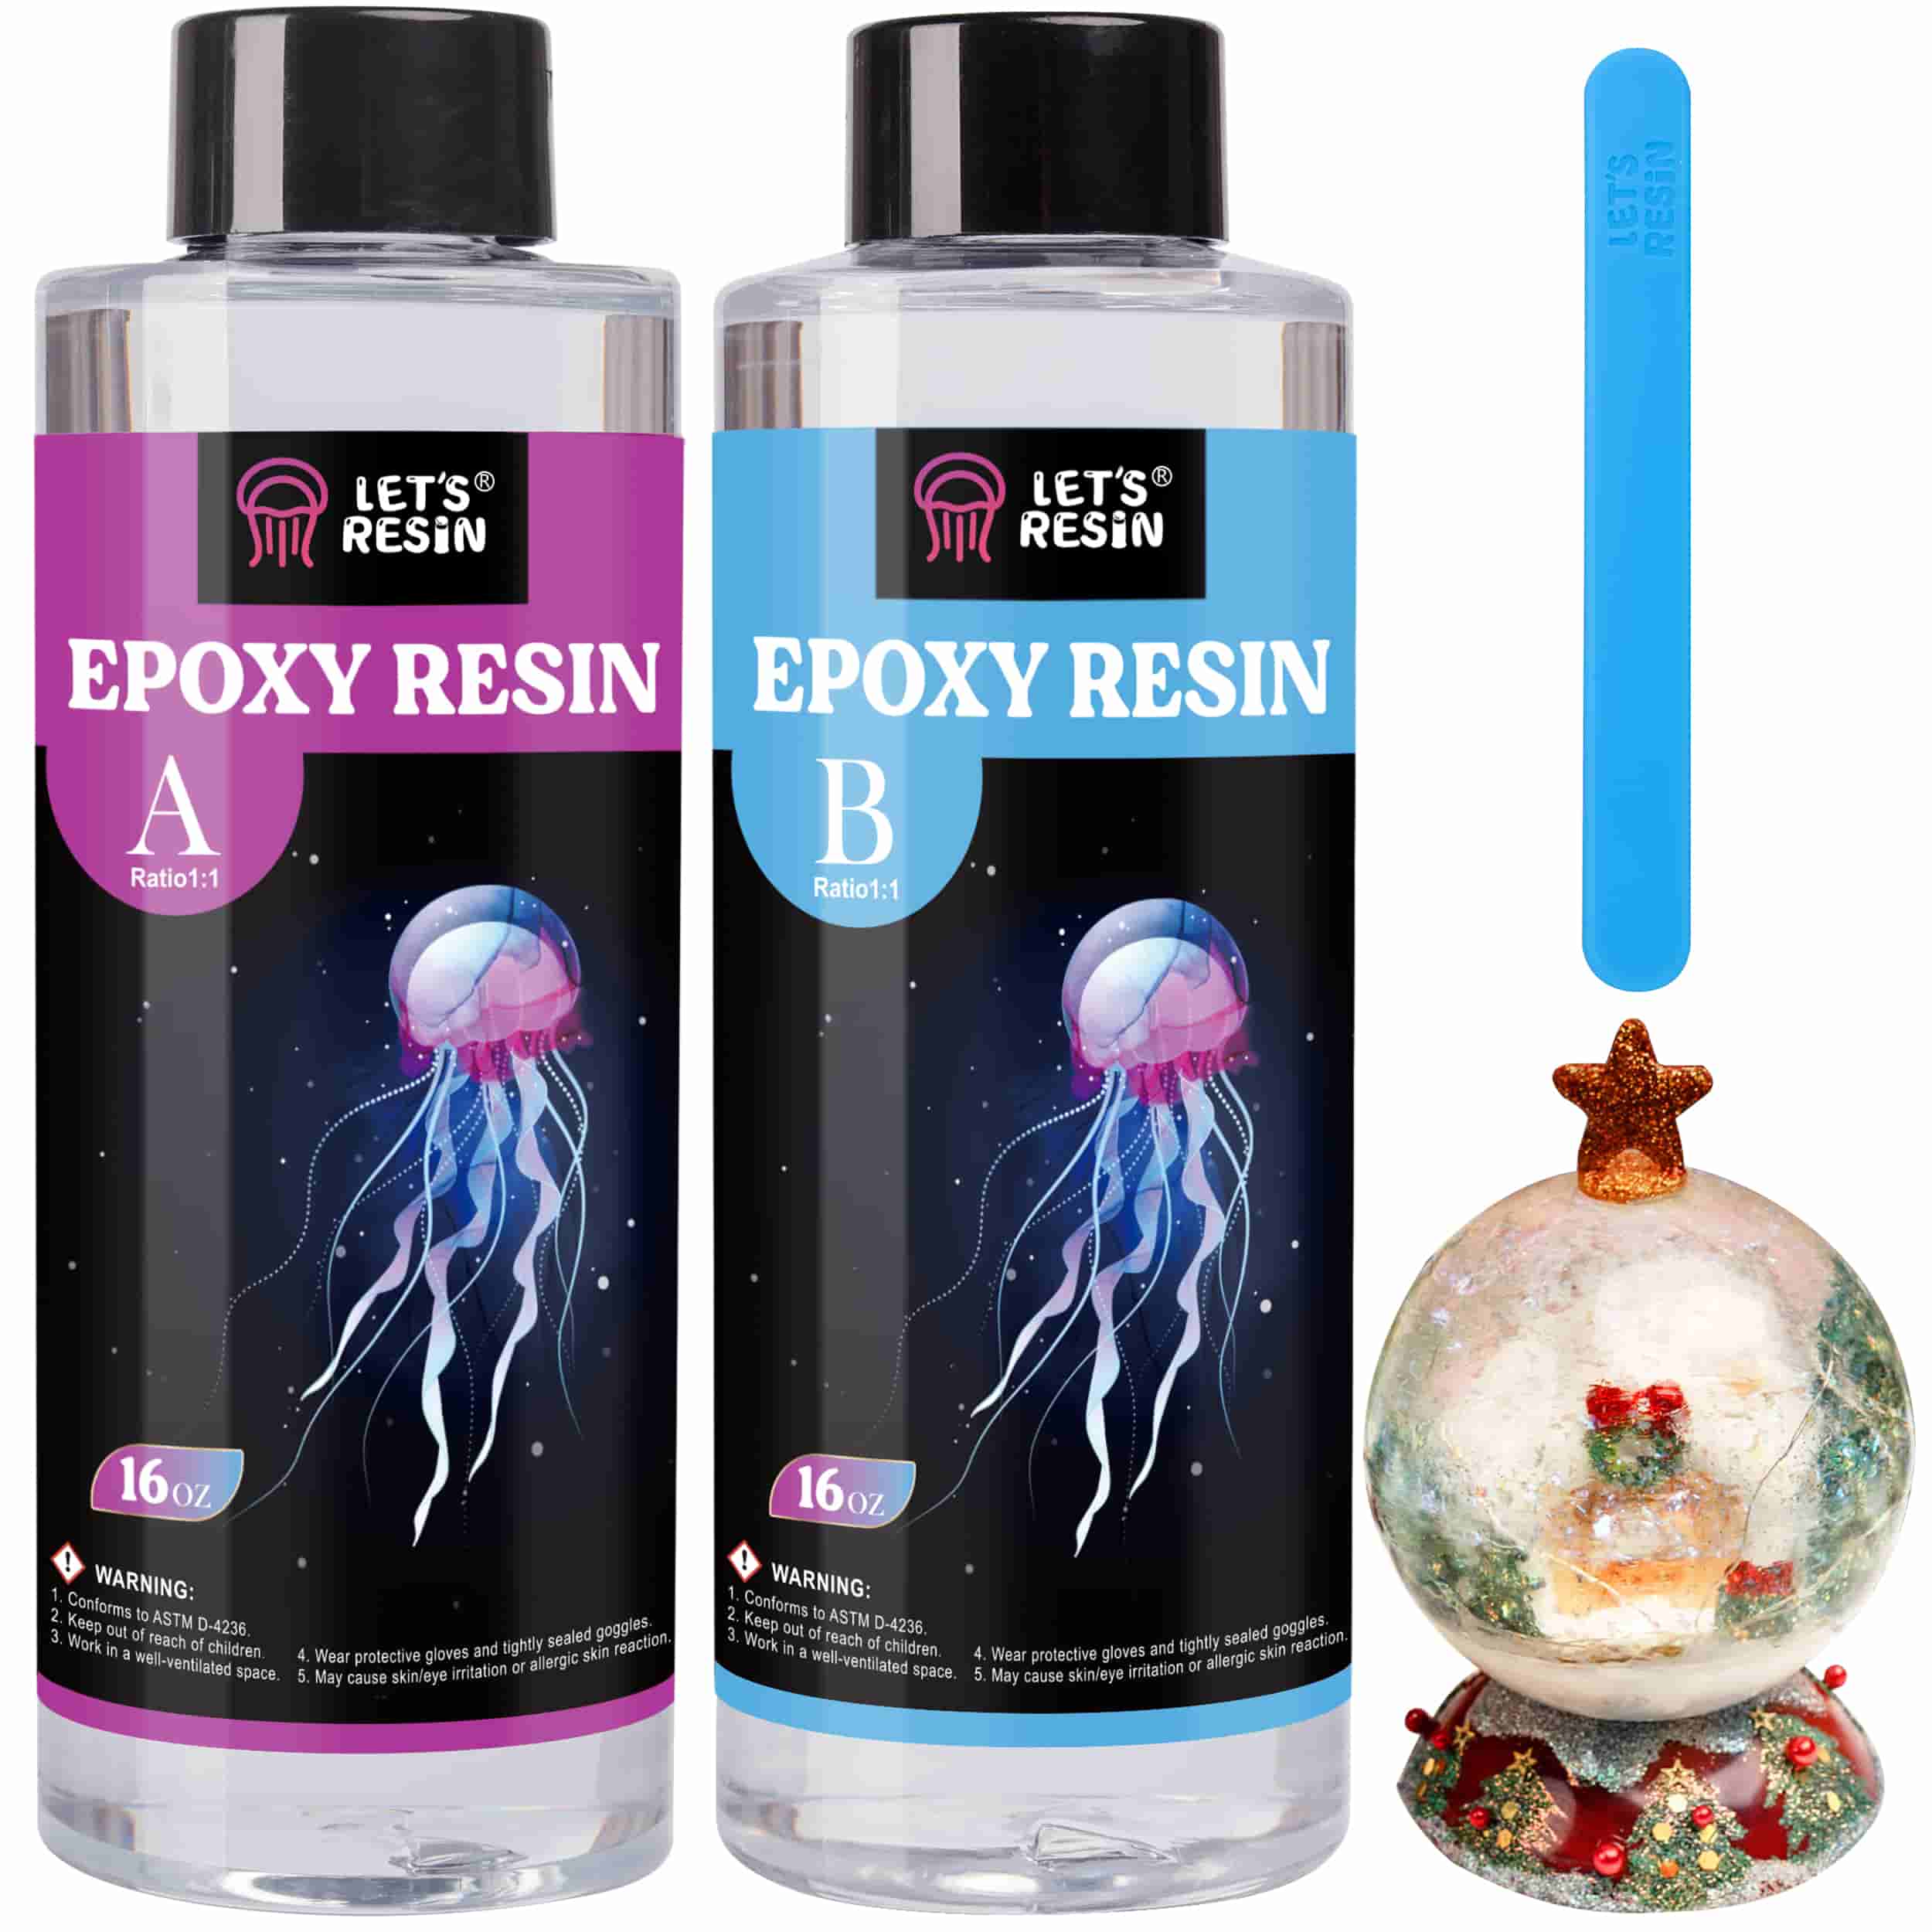 44 oz Black Epoxy Resin